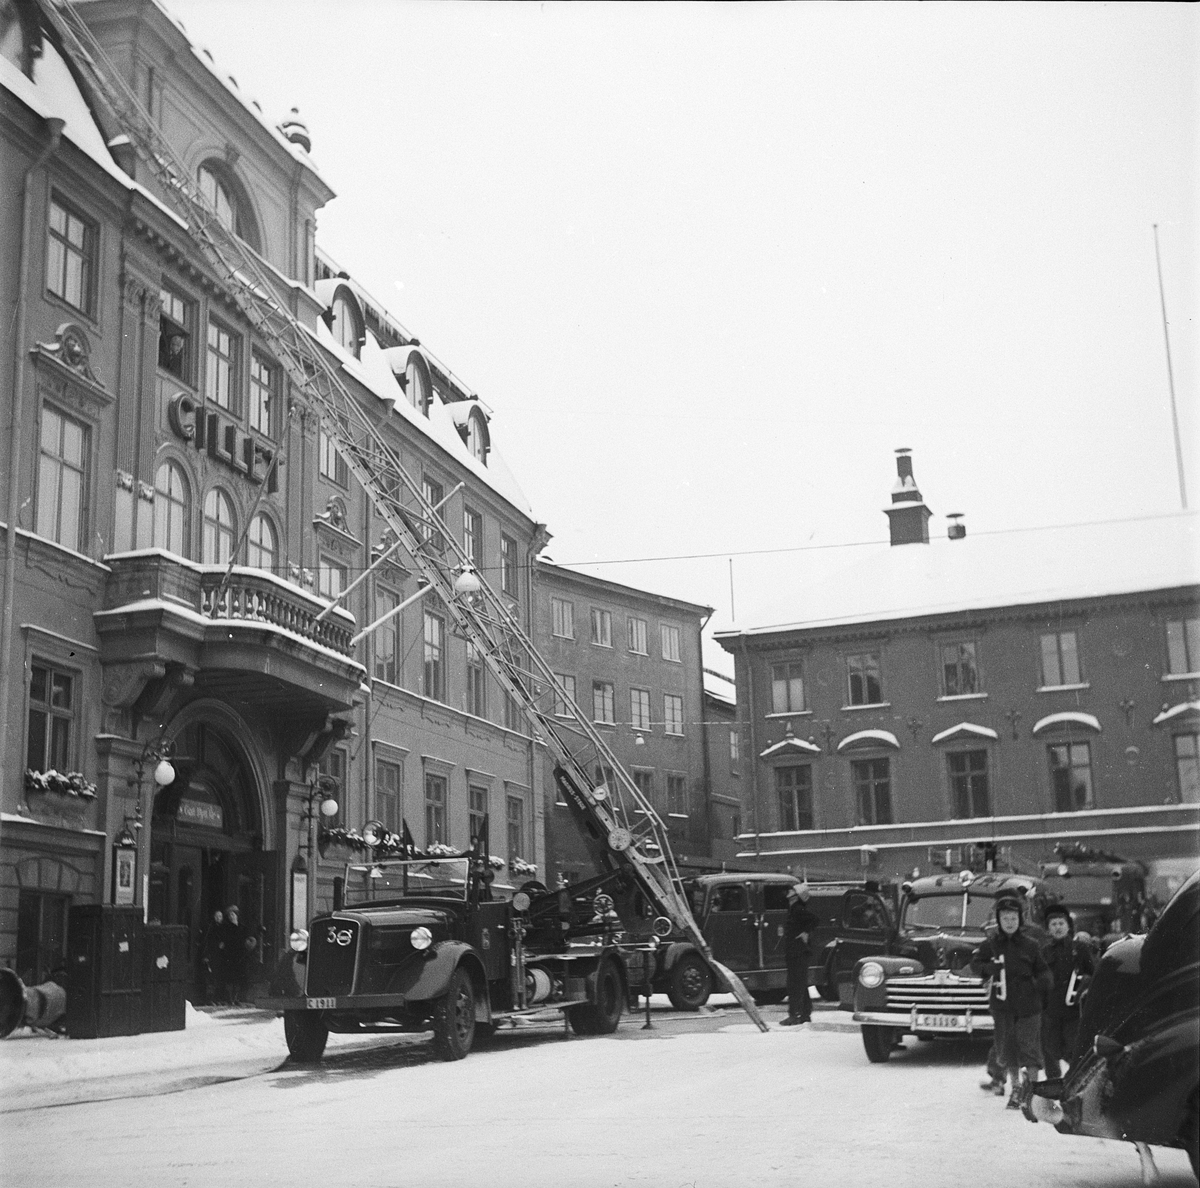 Brand, Gillet, Uppsala 1948